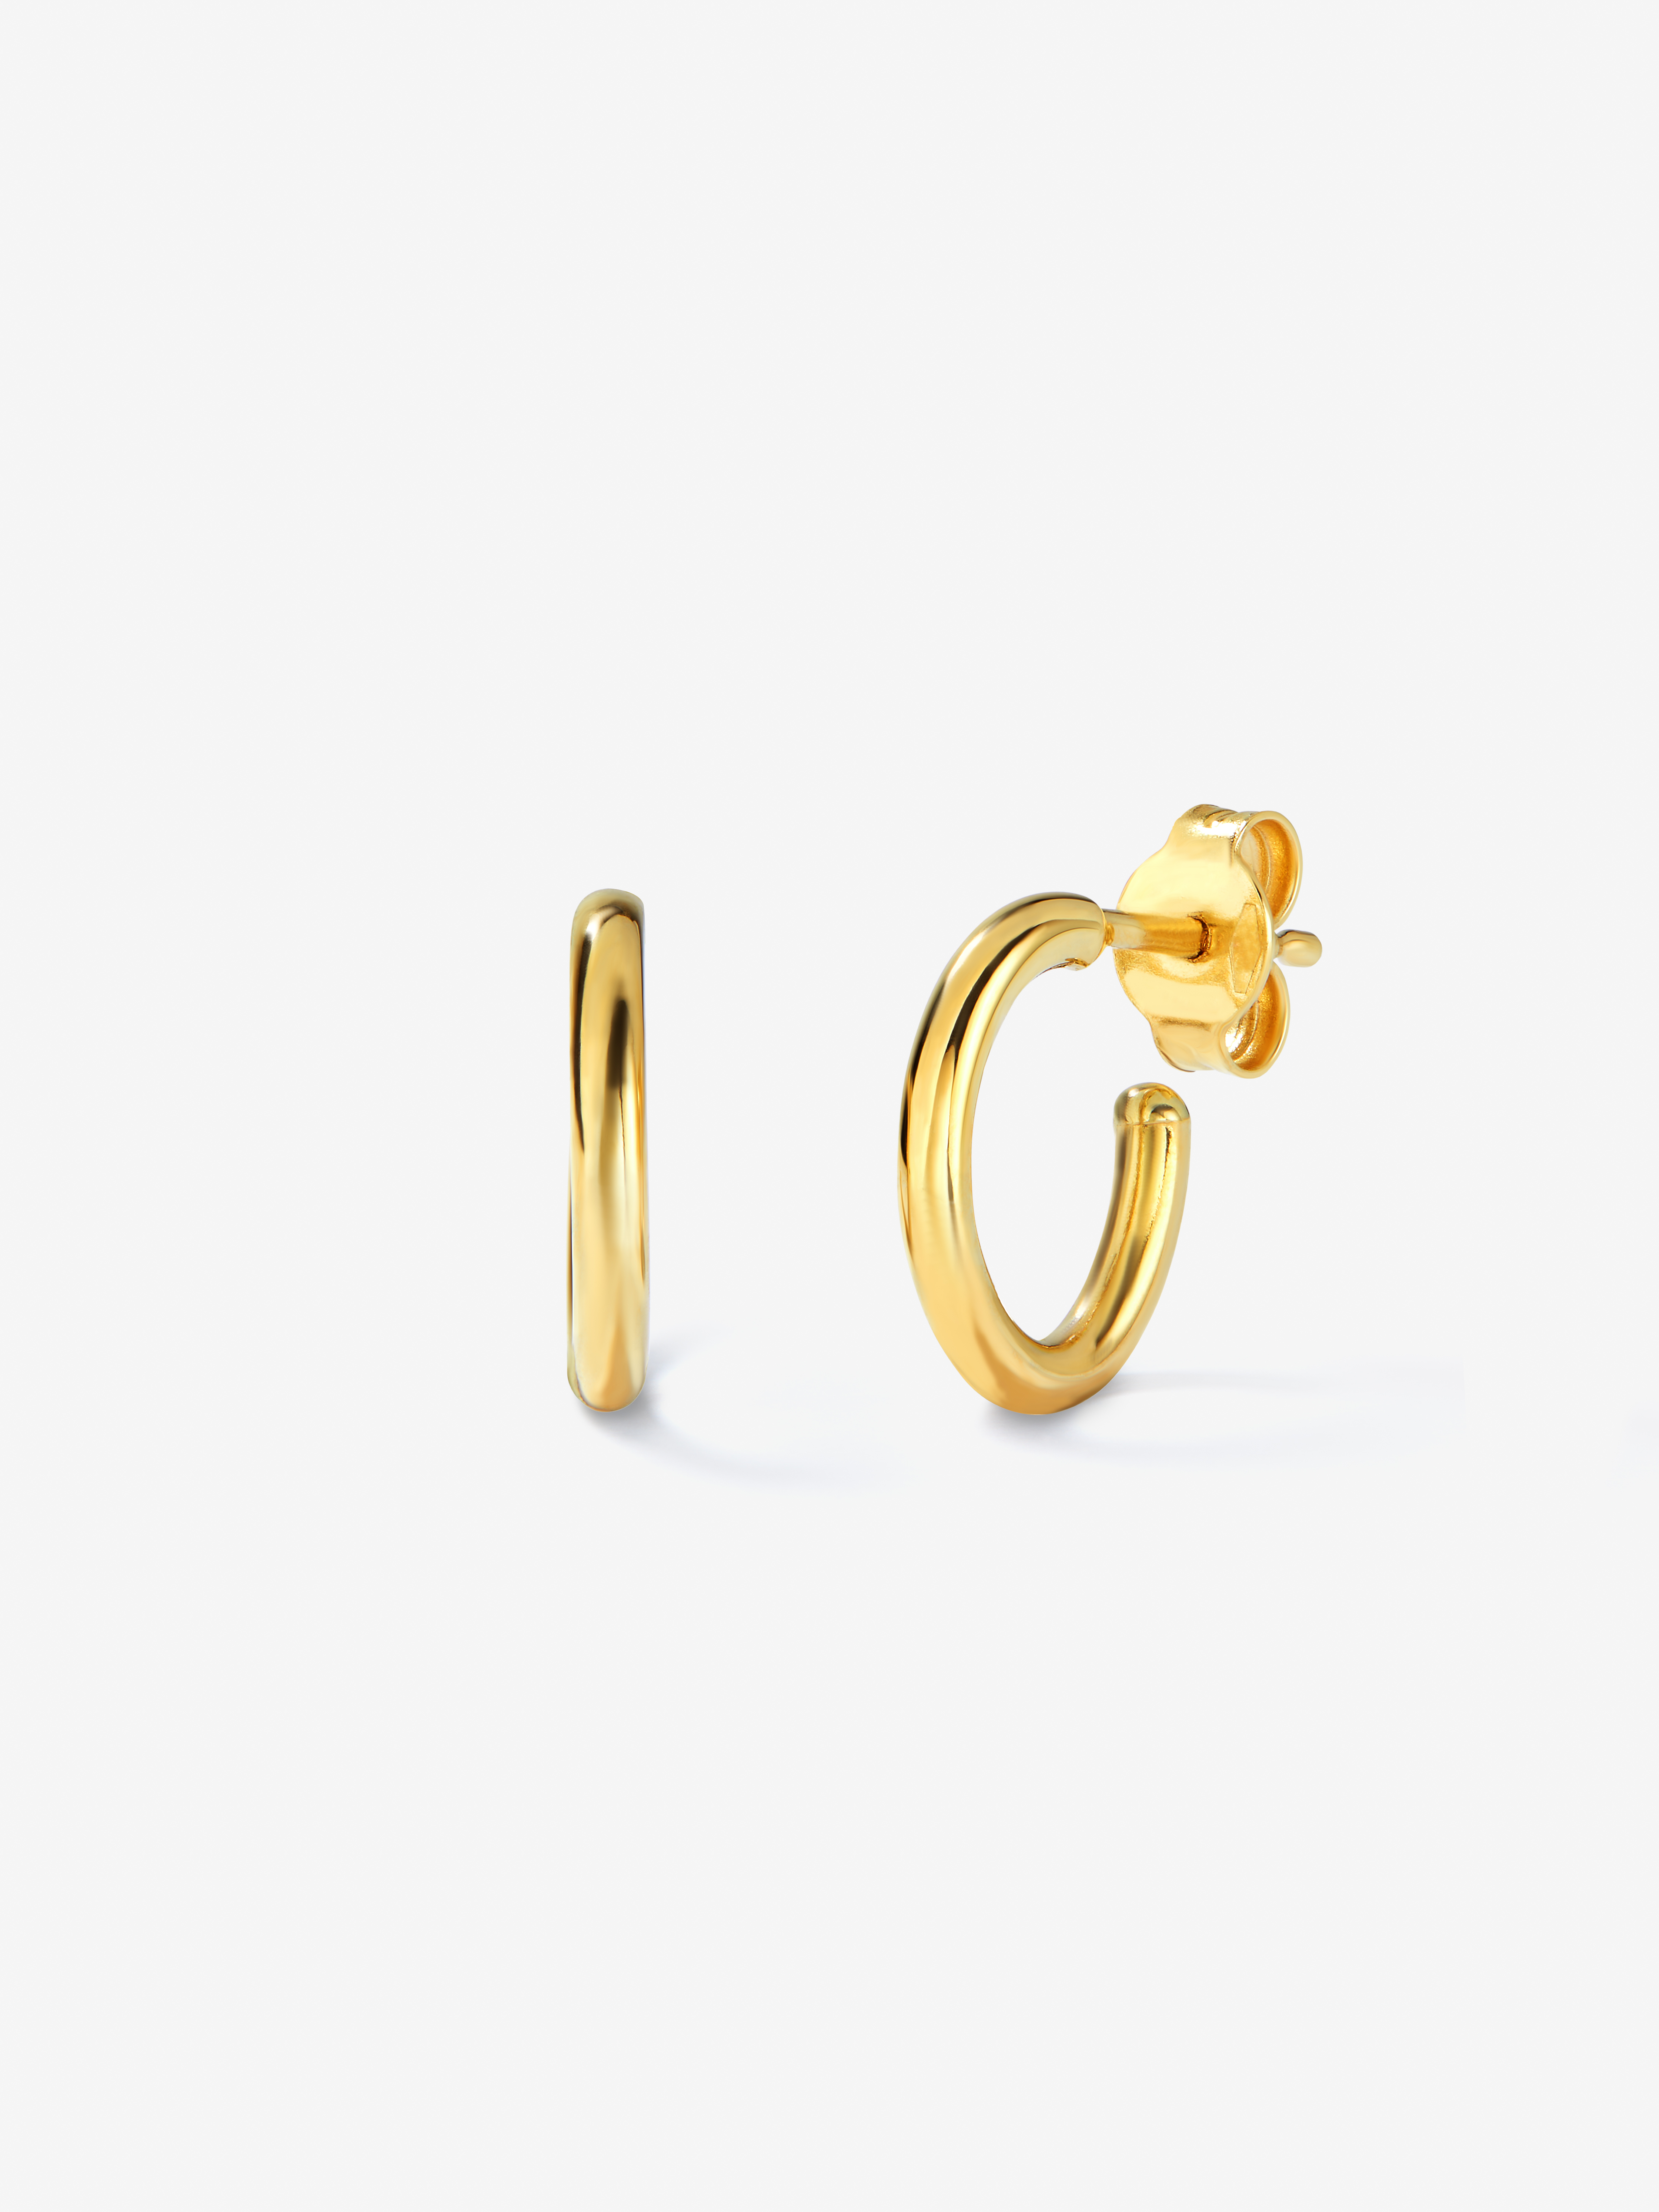 18k yellow gold ring earrings